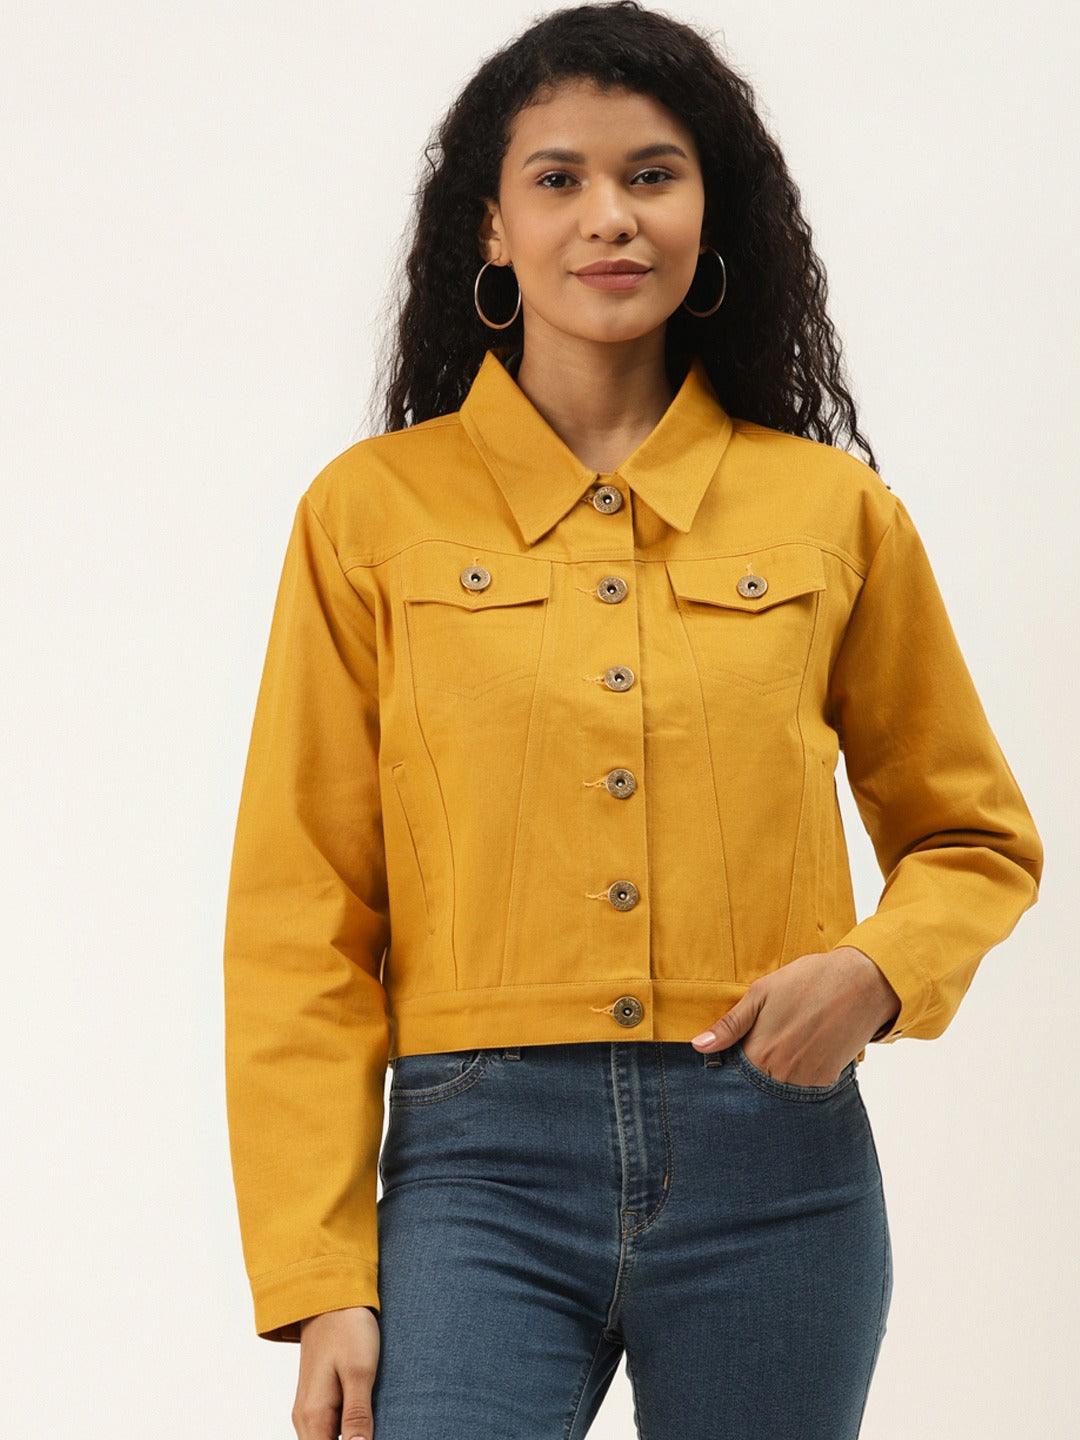 Full Sleeve Ladies Yellow Denim Jacket at Rs 220/piece in New Delhi | ID:  22941458197